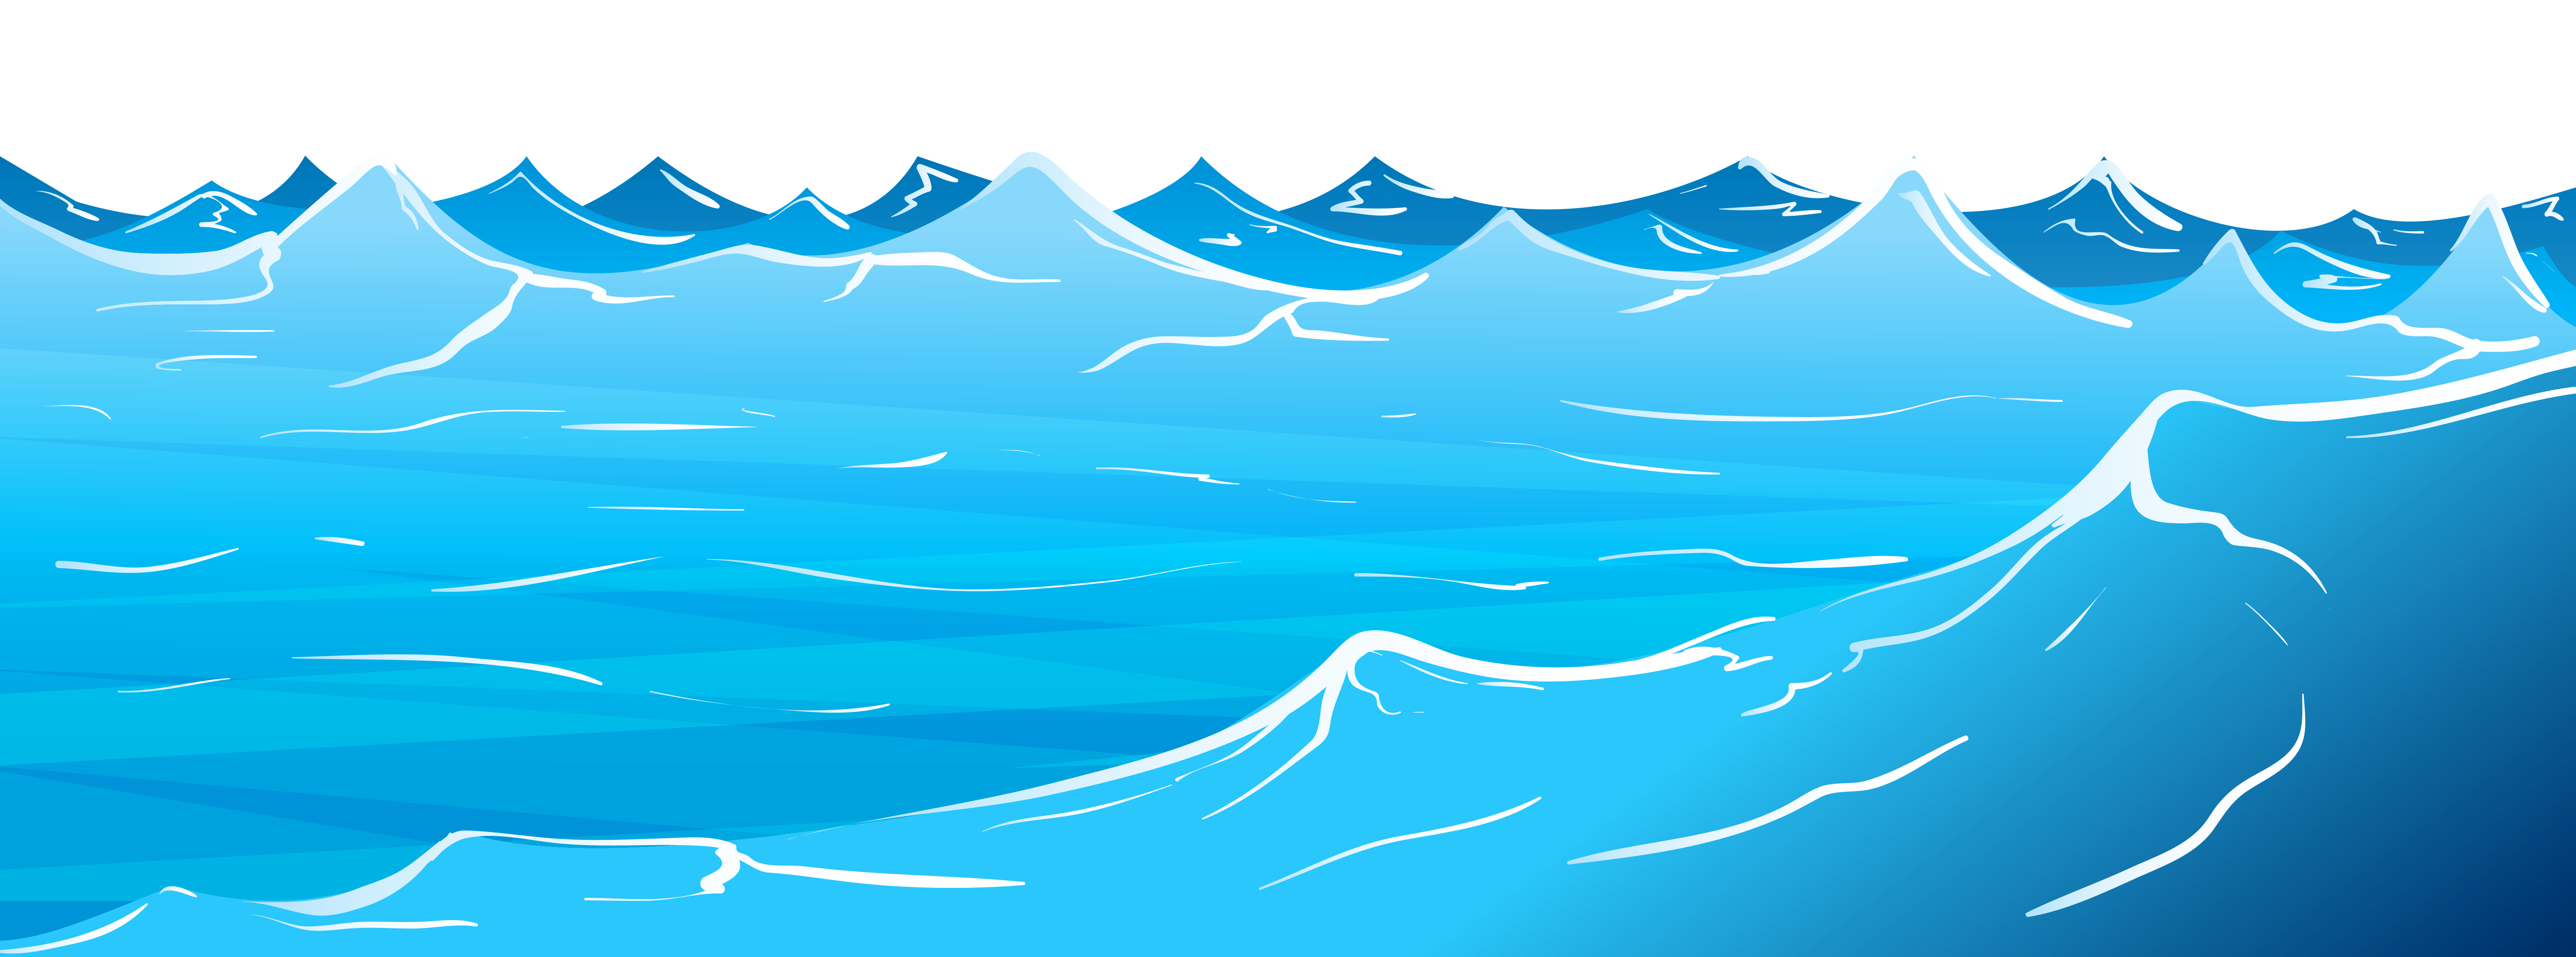 waves clipart transparent background